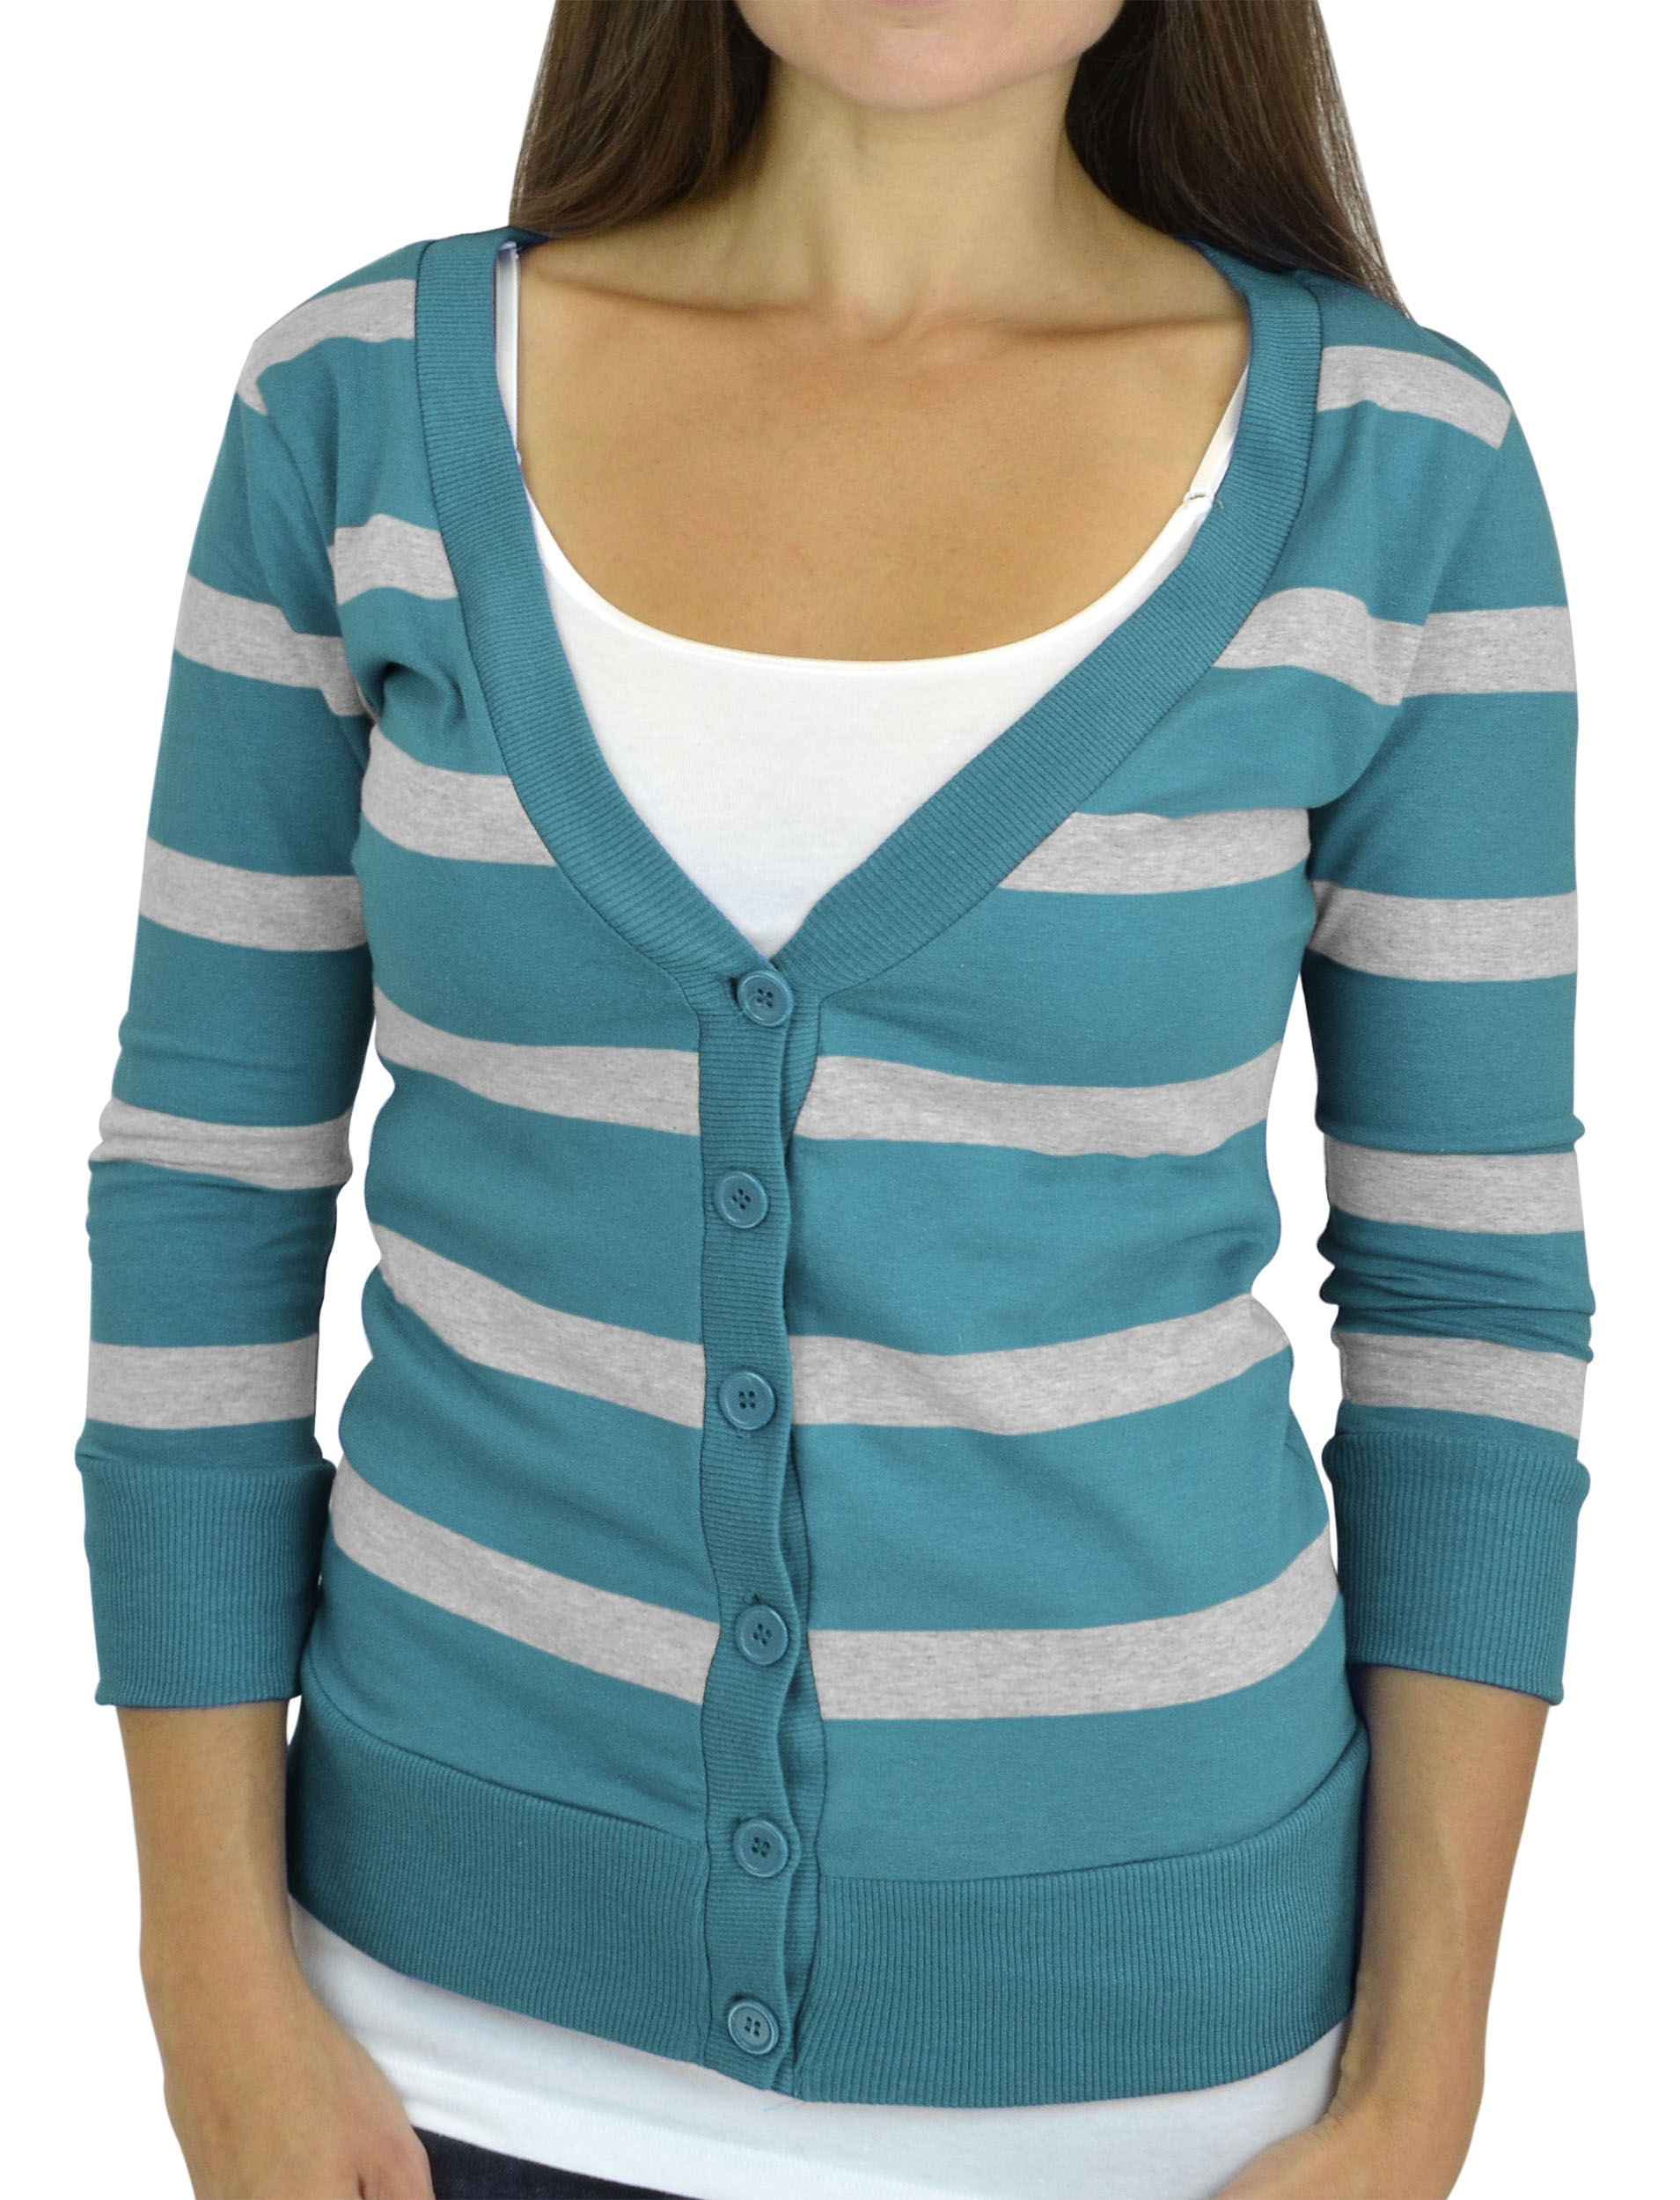 Belle Donne - Women / Girl Junior Size Soft 3/4 Sleeve V-Neck Sweater Cardigans - Teal/Small